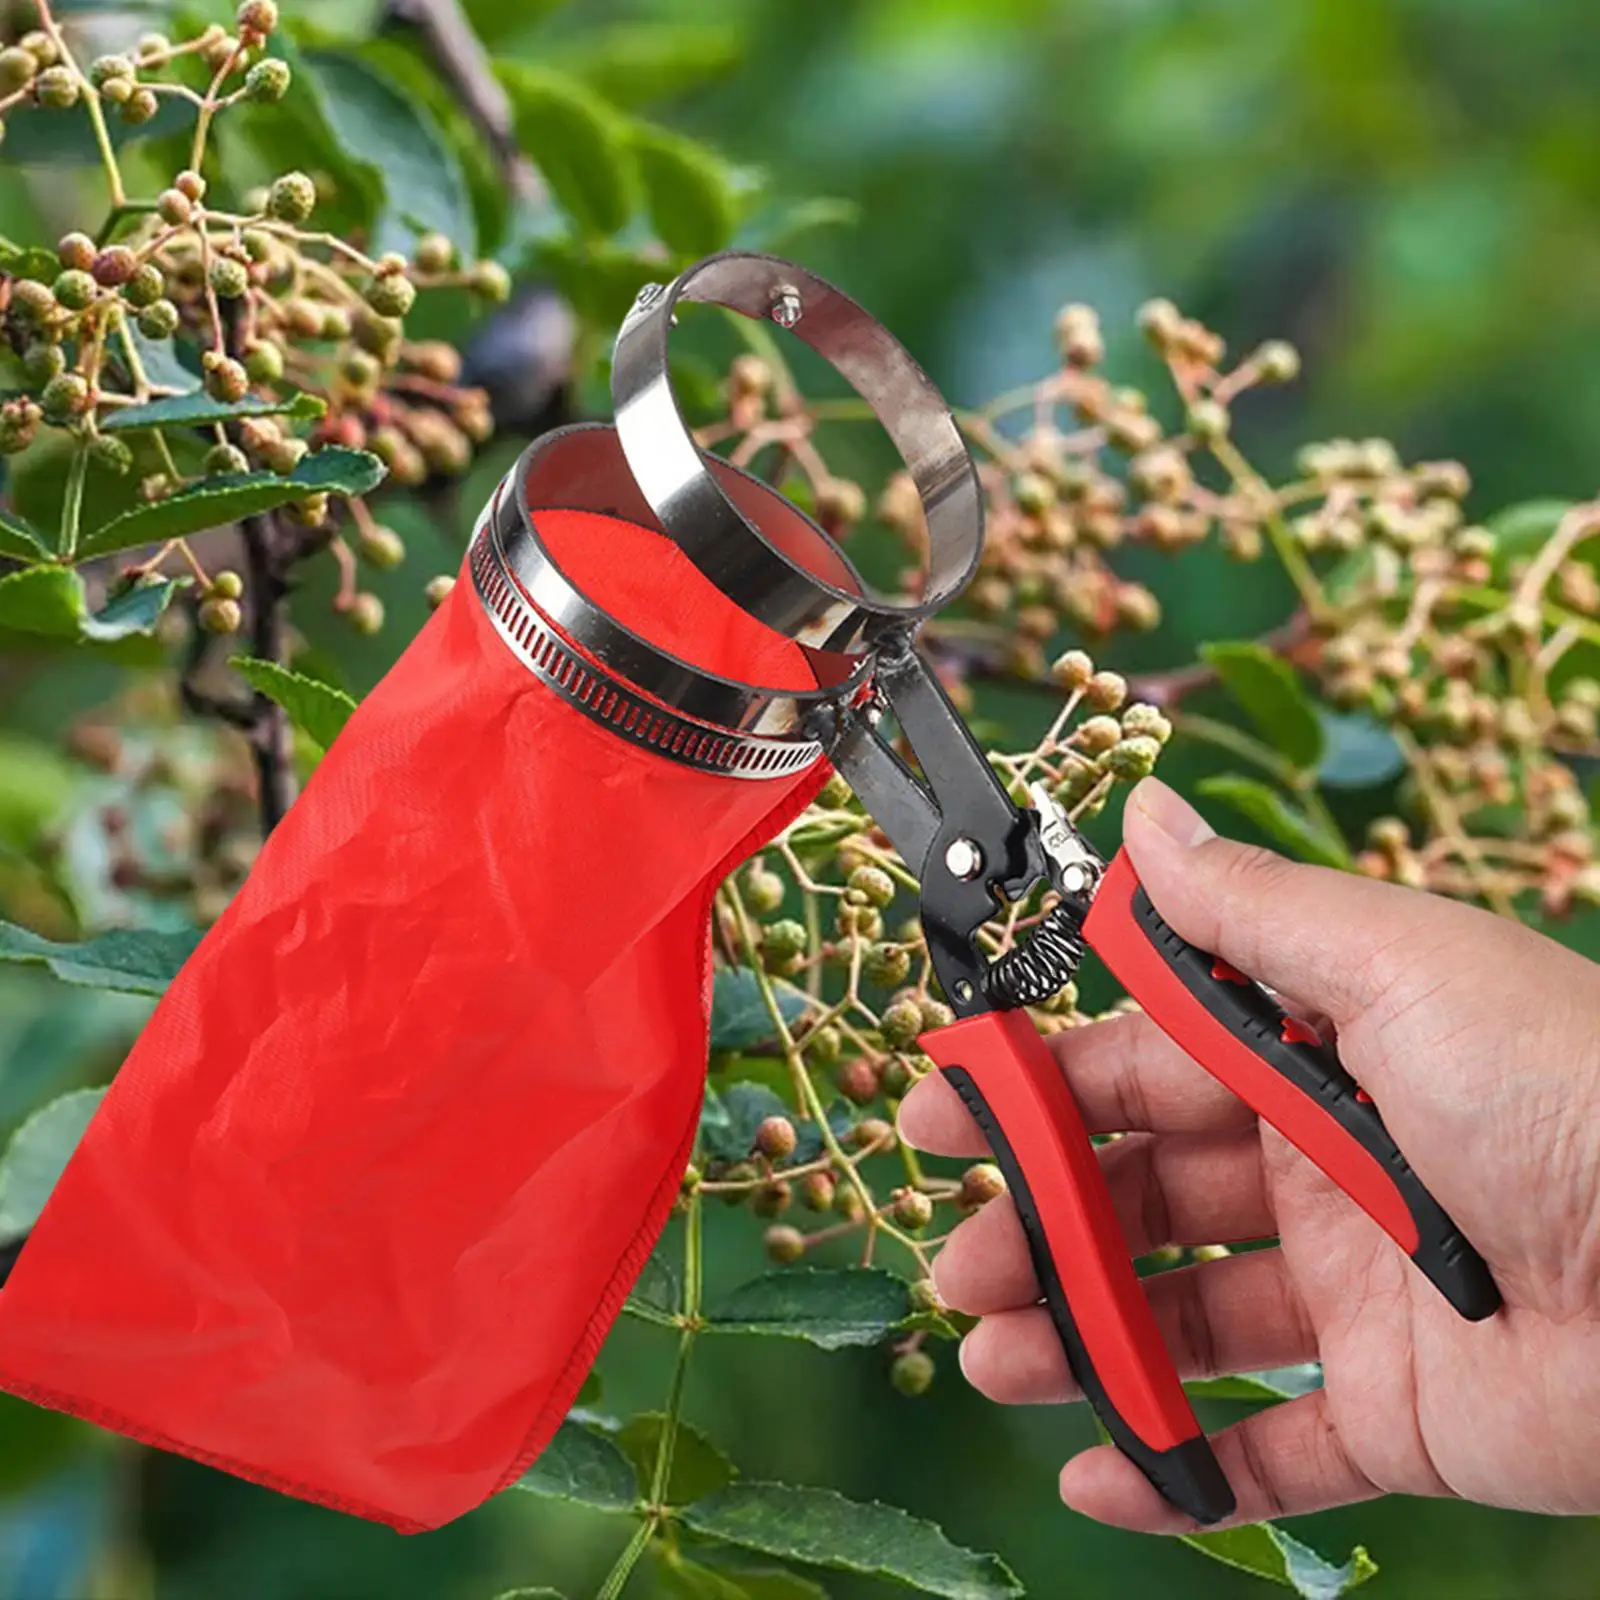 Garden Pepper Picker Harvesting Tool Picking Tool Multipurpose Ergonomic Handle for Gardening Bonsai Pruning Landscaping Beans